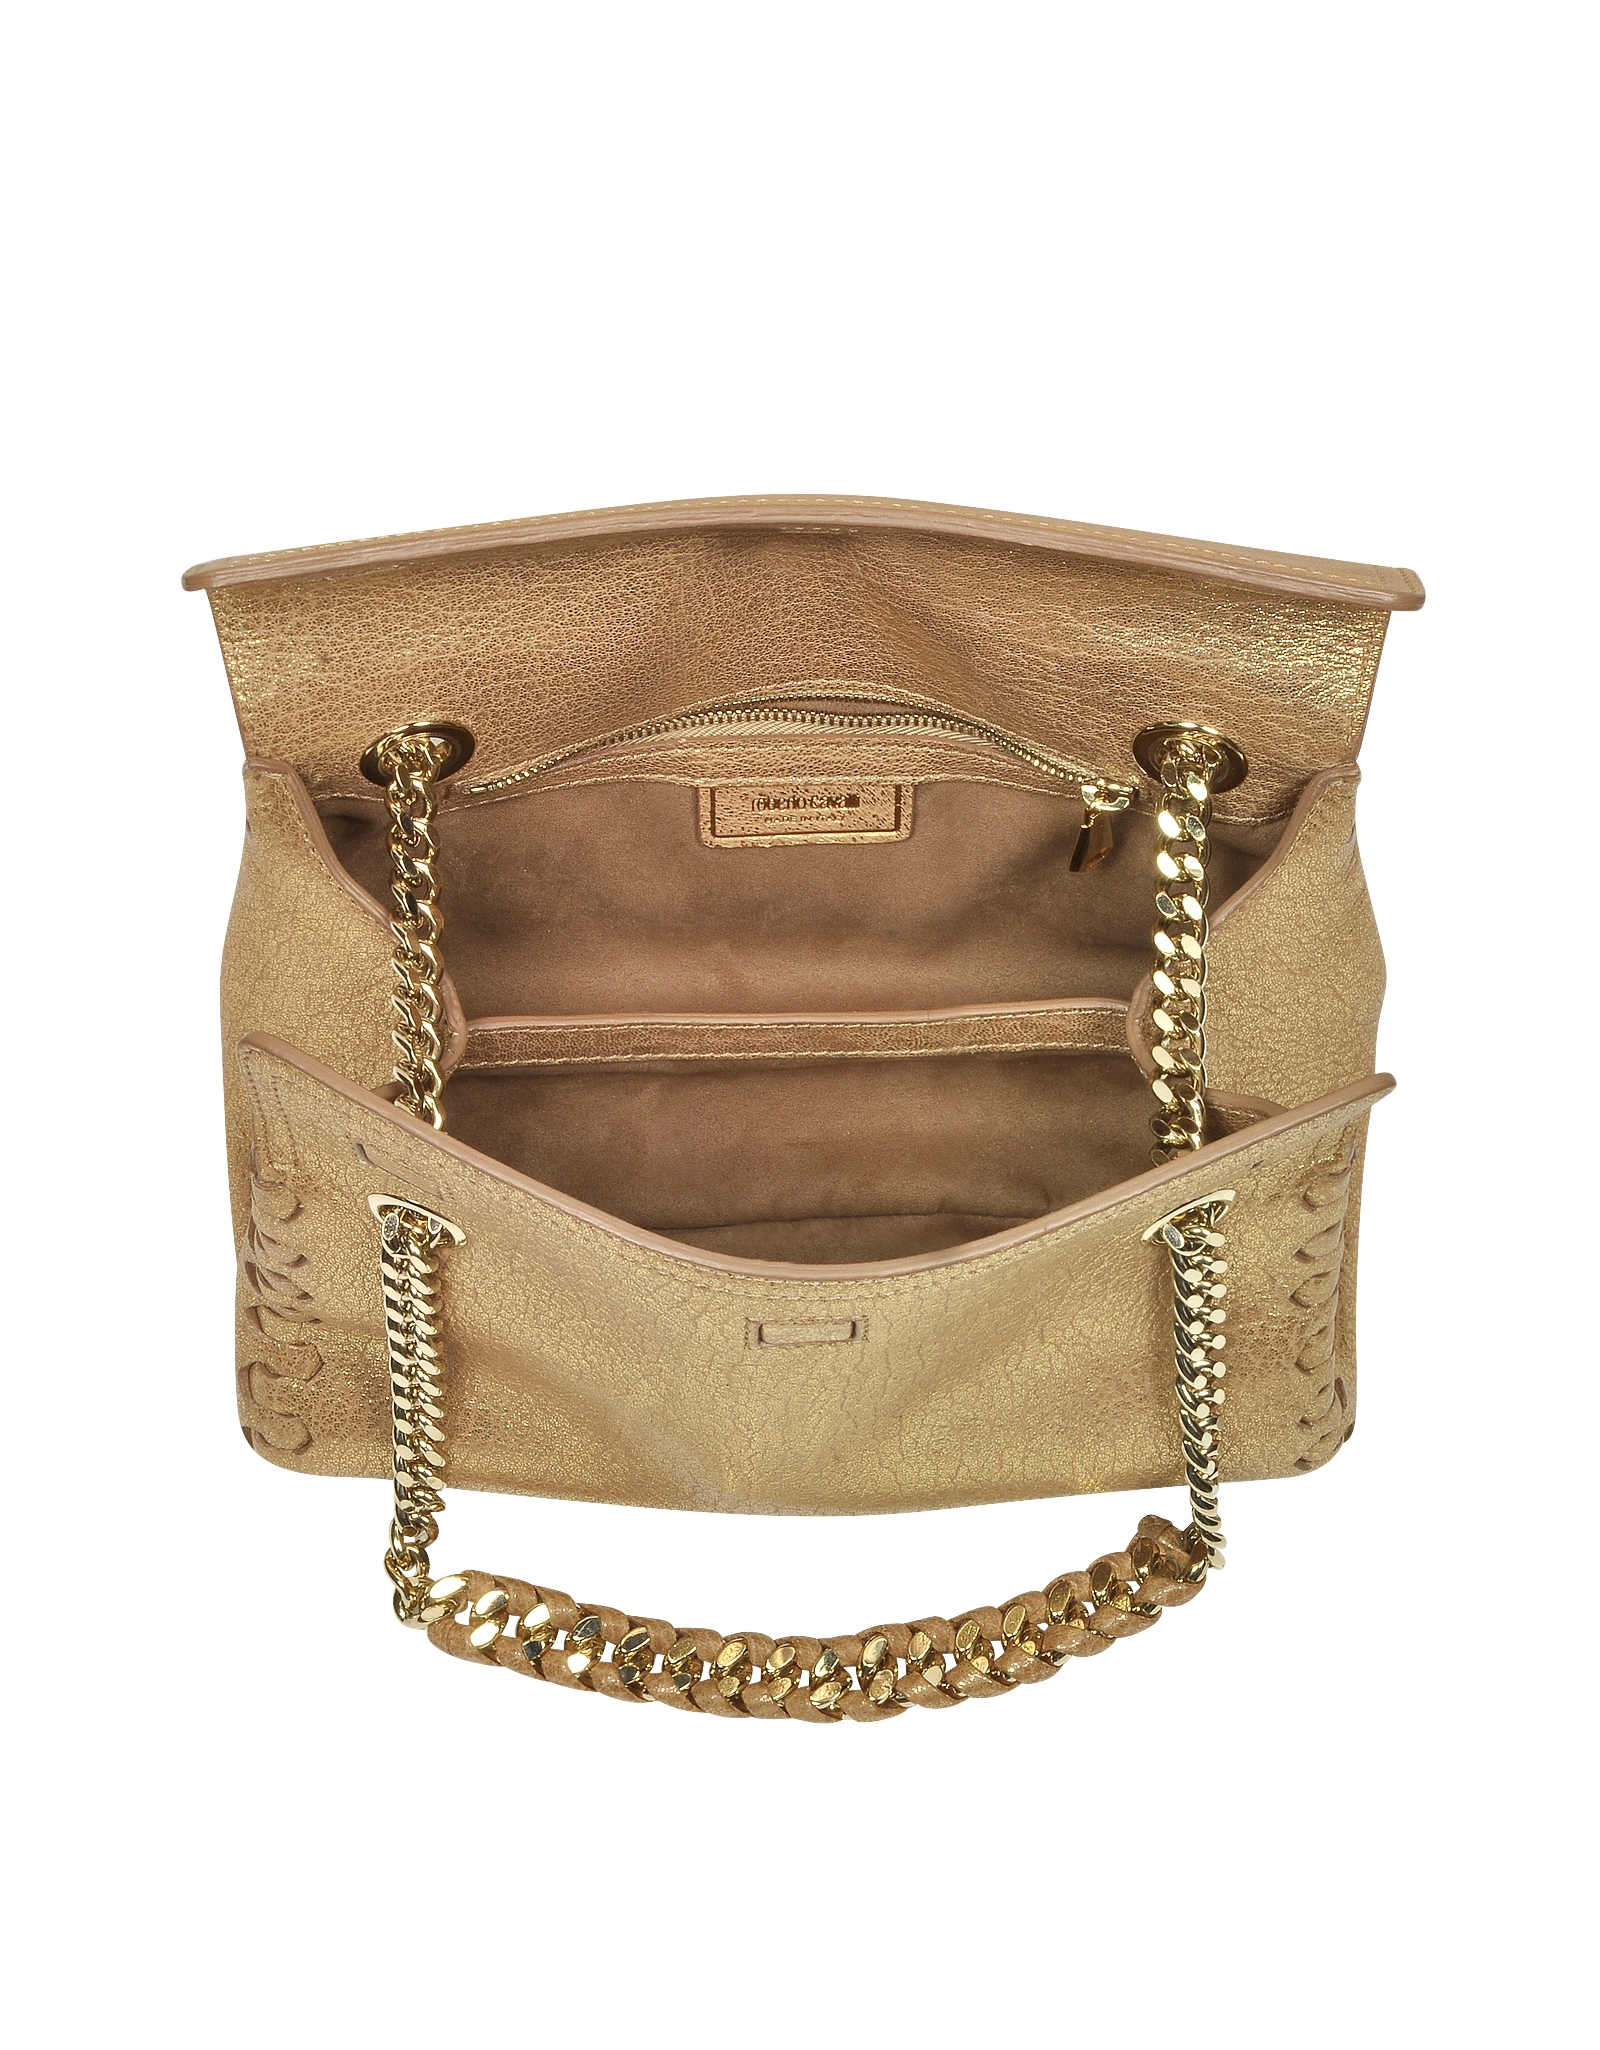 Roberto Cavalli Gold Laminated Leather Crossbody Bag W/Chain Strap in Metallic - Lyst